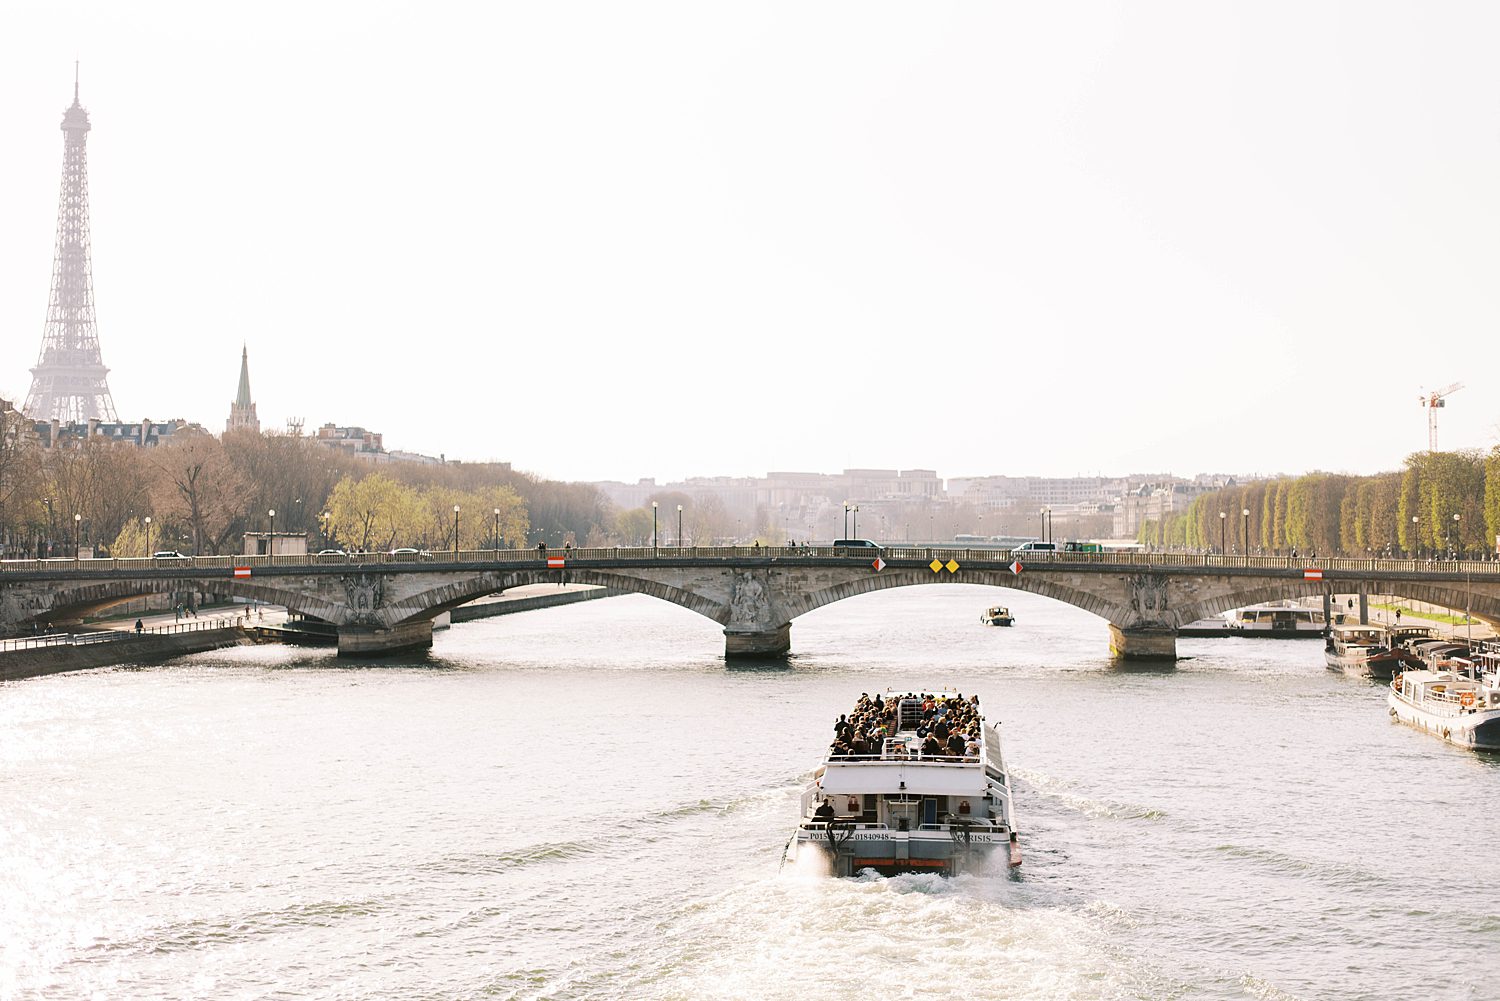 reception boat sails on River Seine